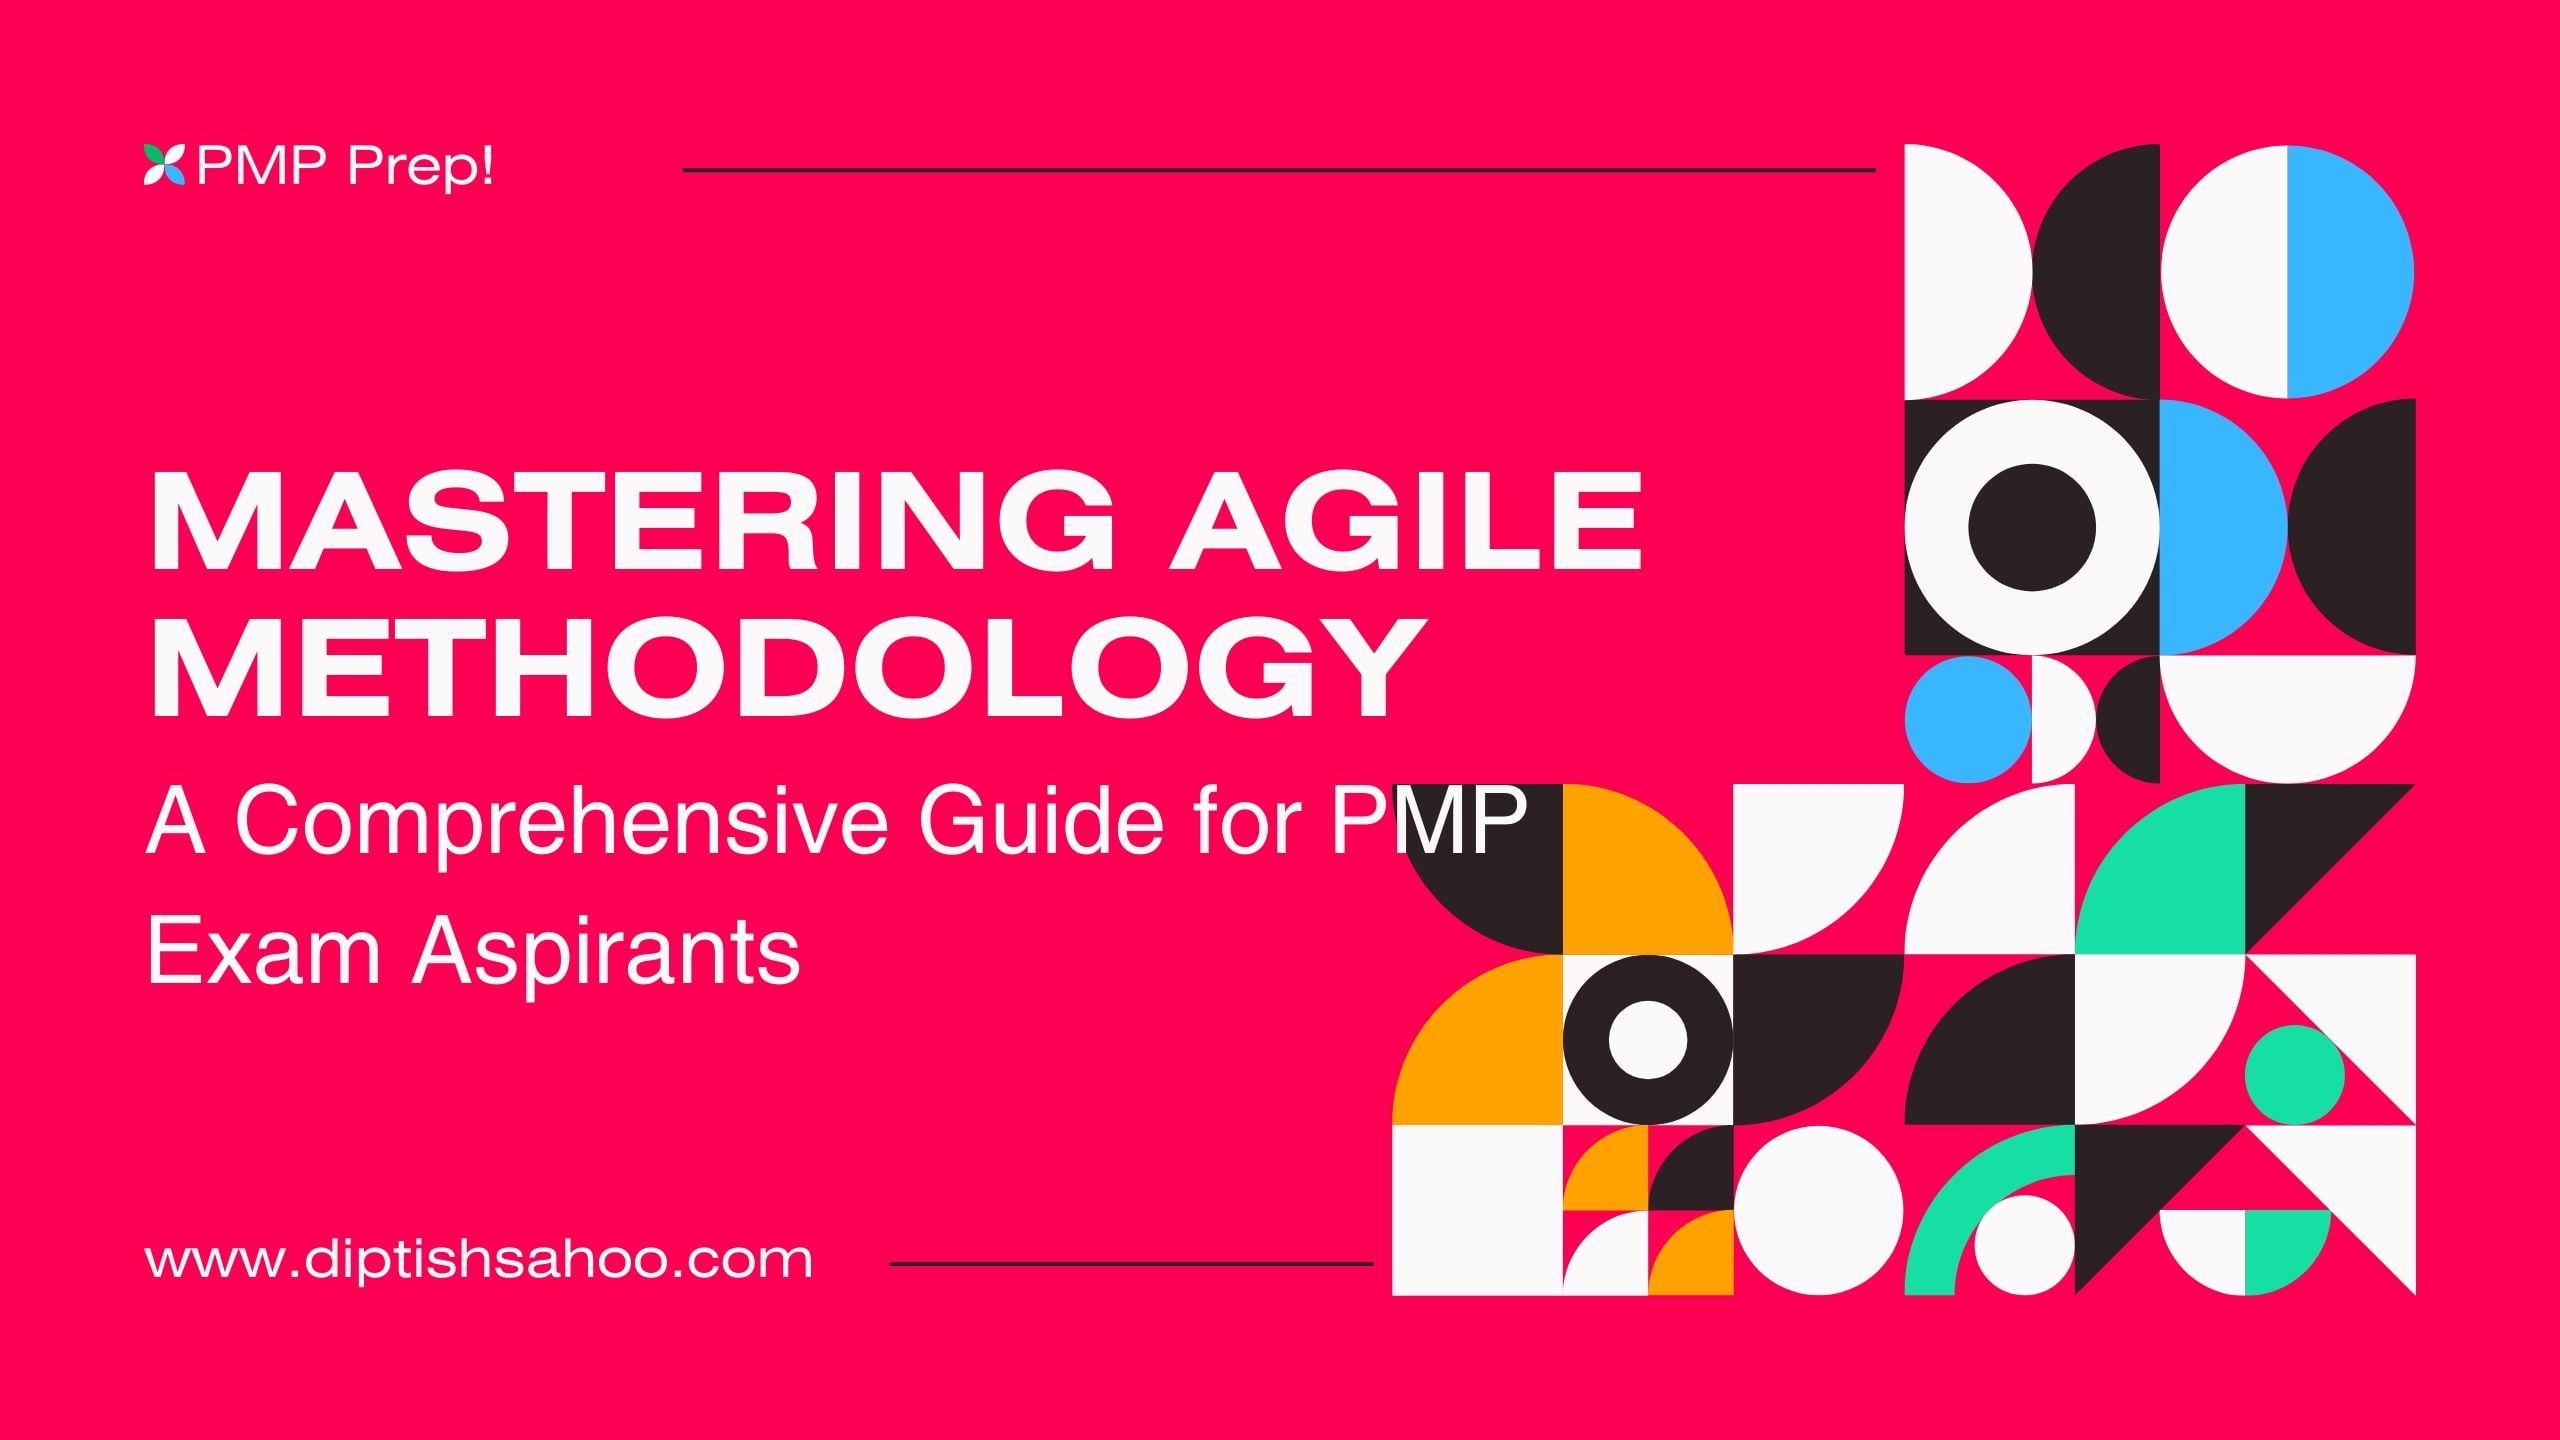 Mastering Agile Methodology: A Comprehensive Guide for PMP Exam Aspirants